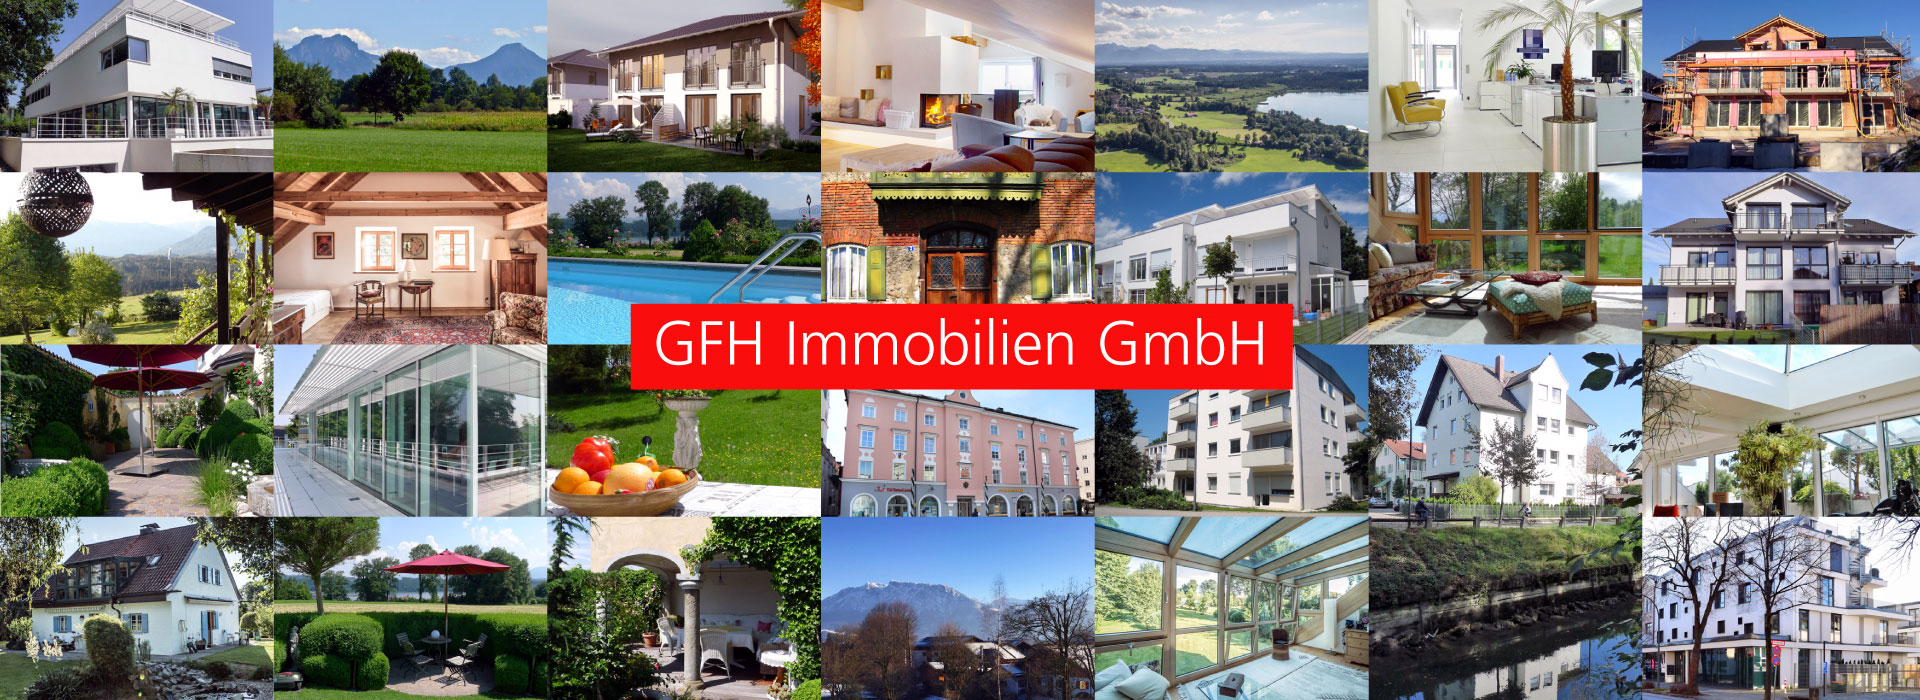 GFH-Immobilien Banner